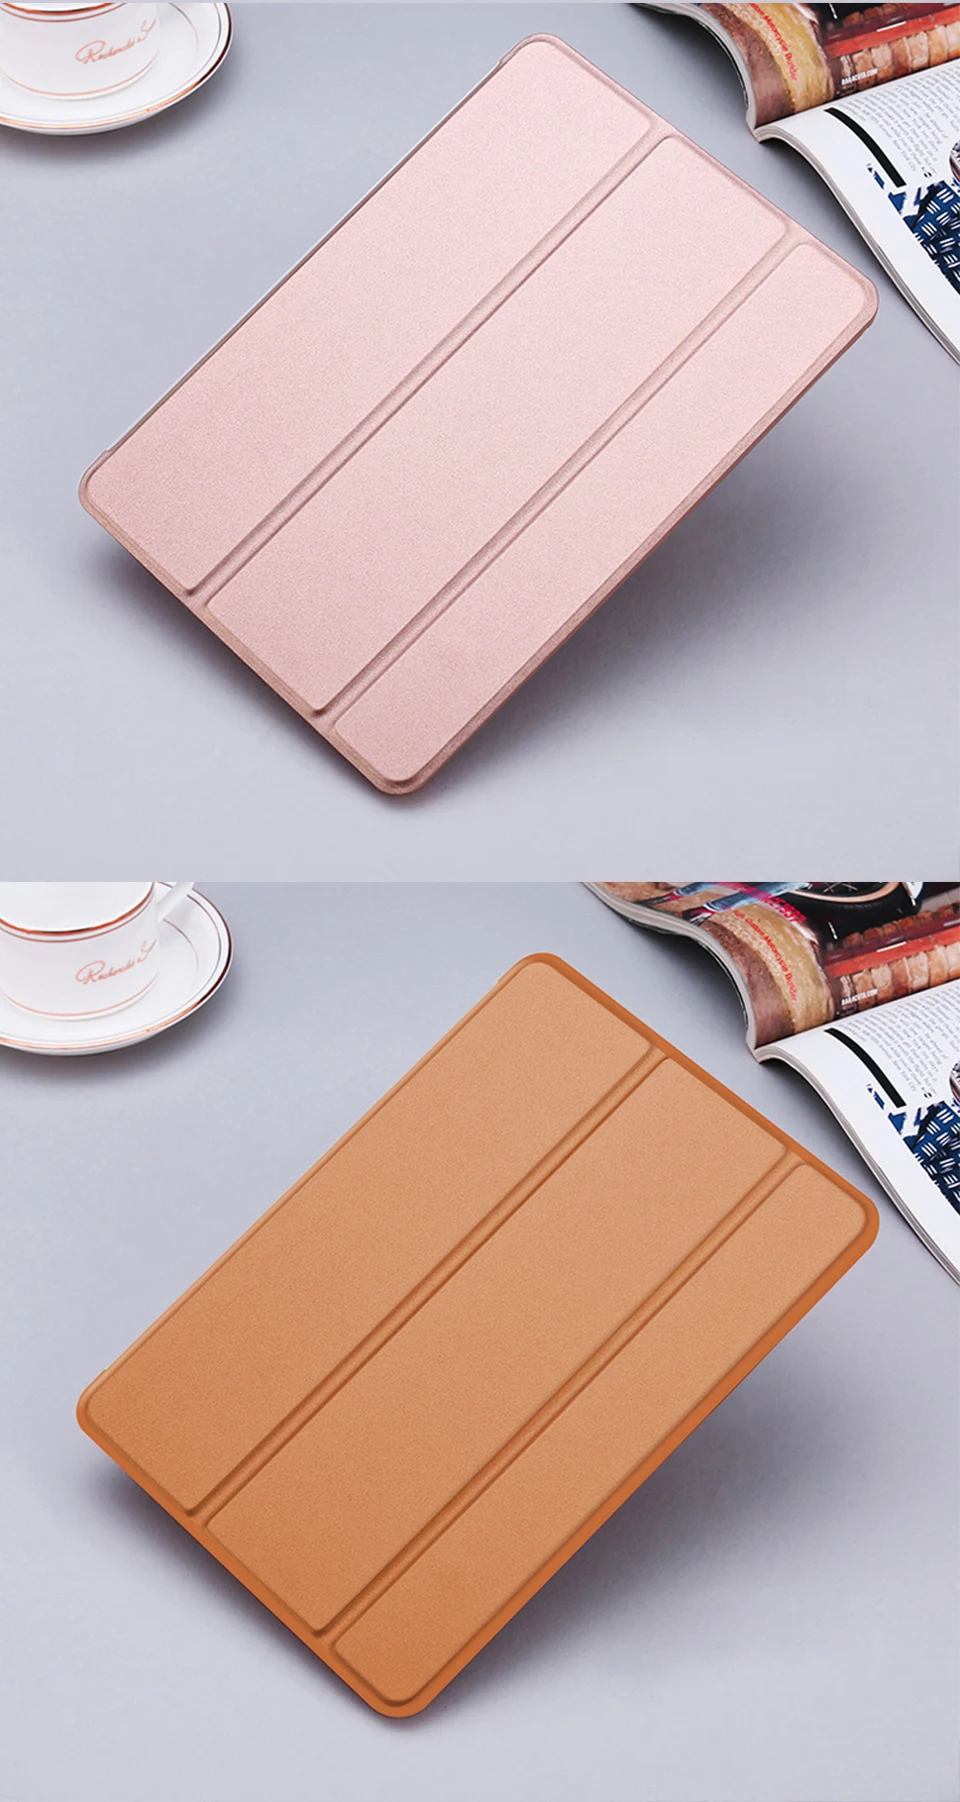 PU кожаный ультра тонкий чехол для Xiaomi mi pad 1 2 3 mi pad1 mi pad2 mi pad3 легкий вес Жесткий ПК задняя крышка Smart Cover для Xiaomi mi pad 1